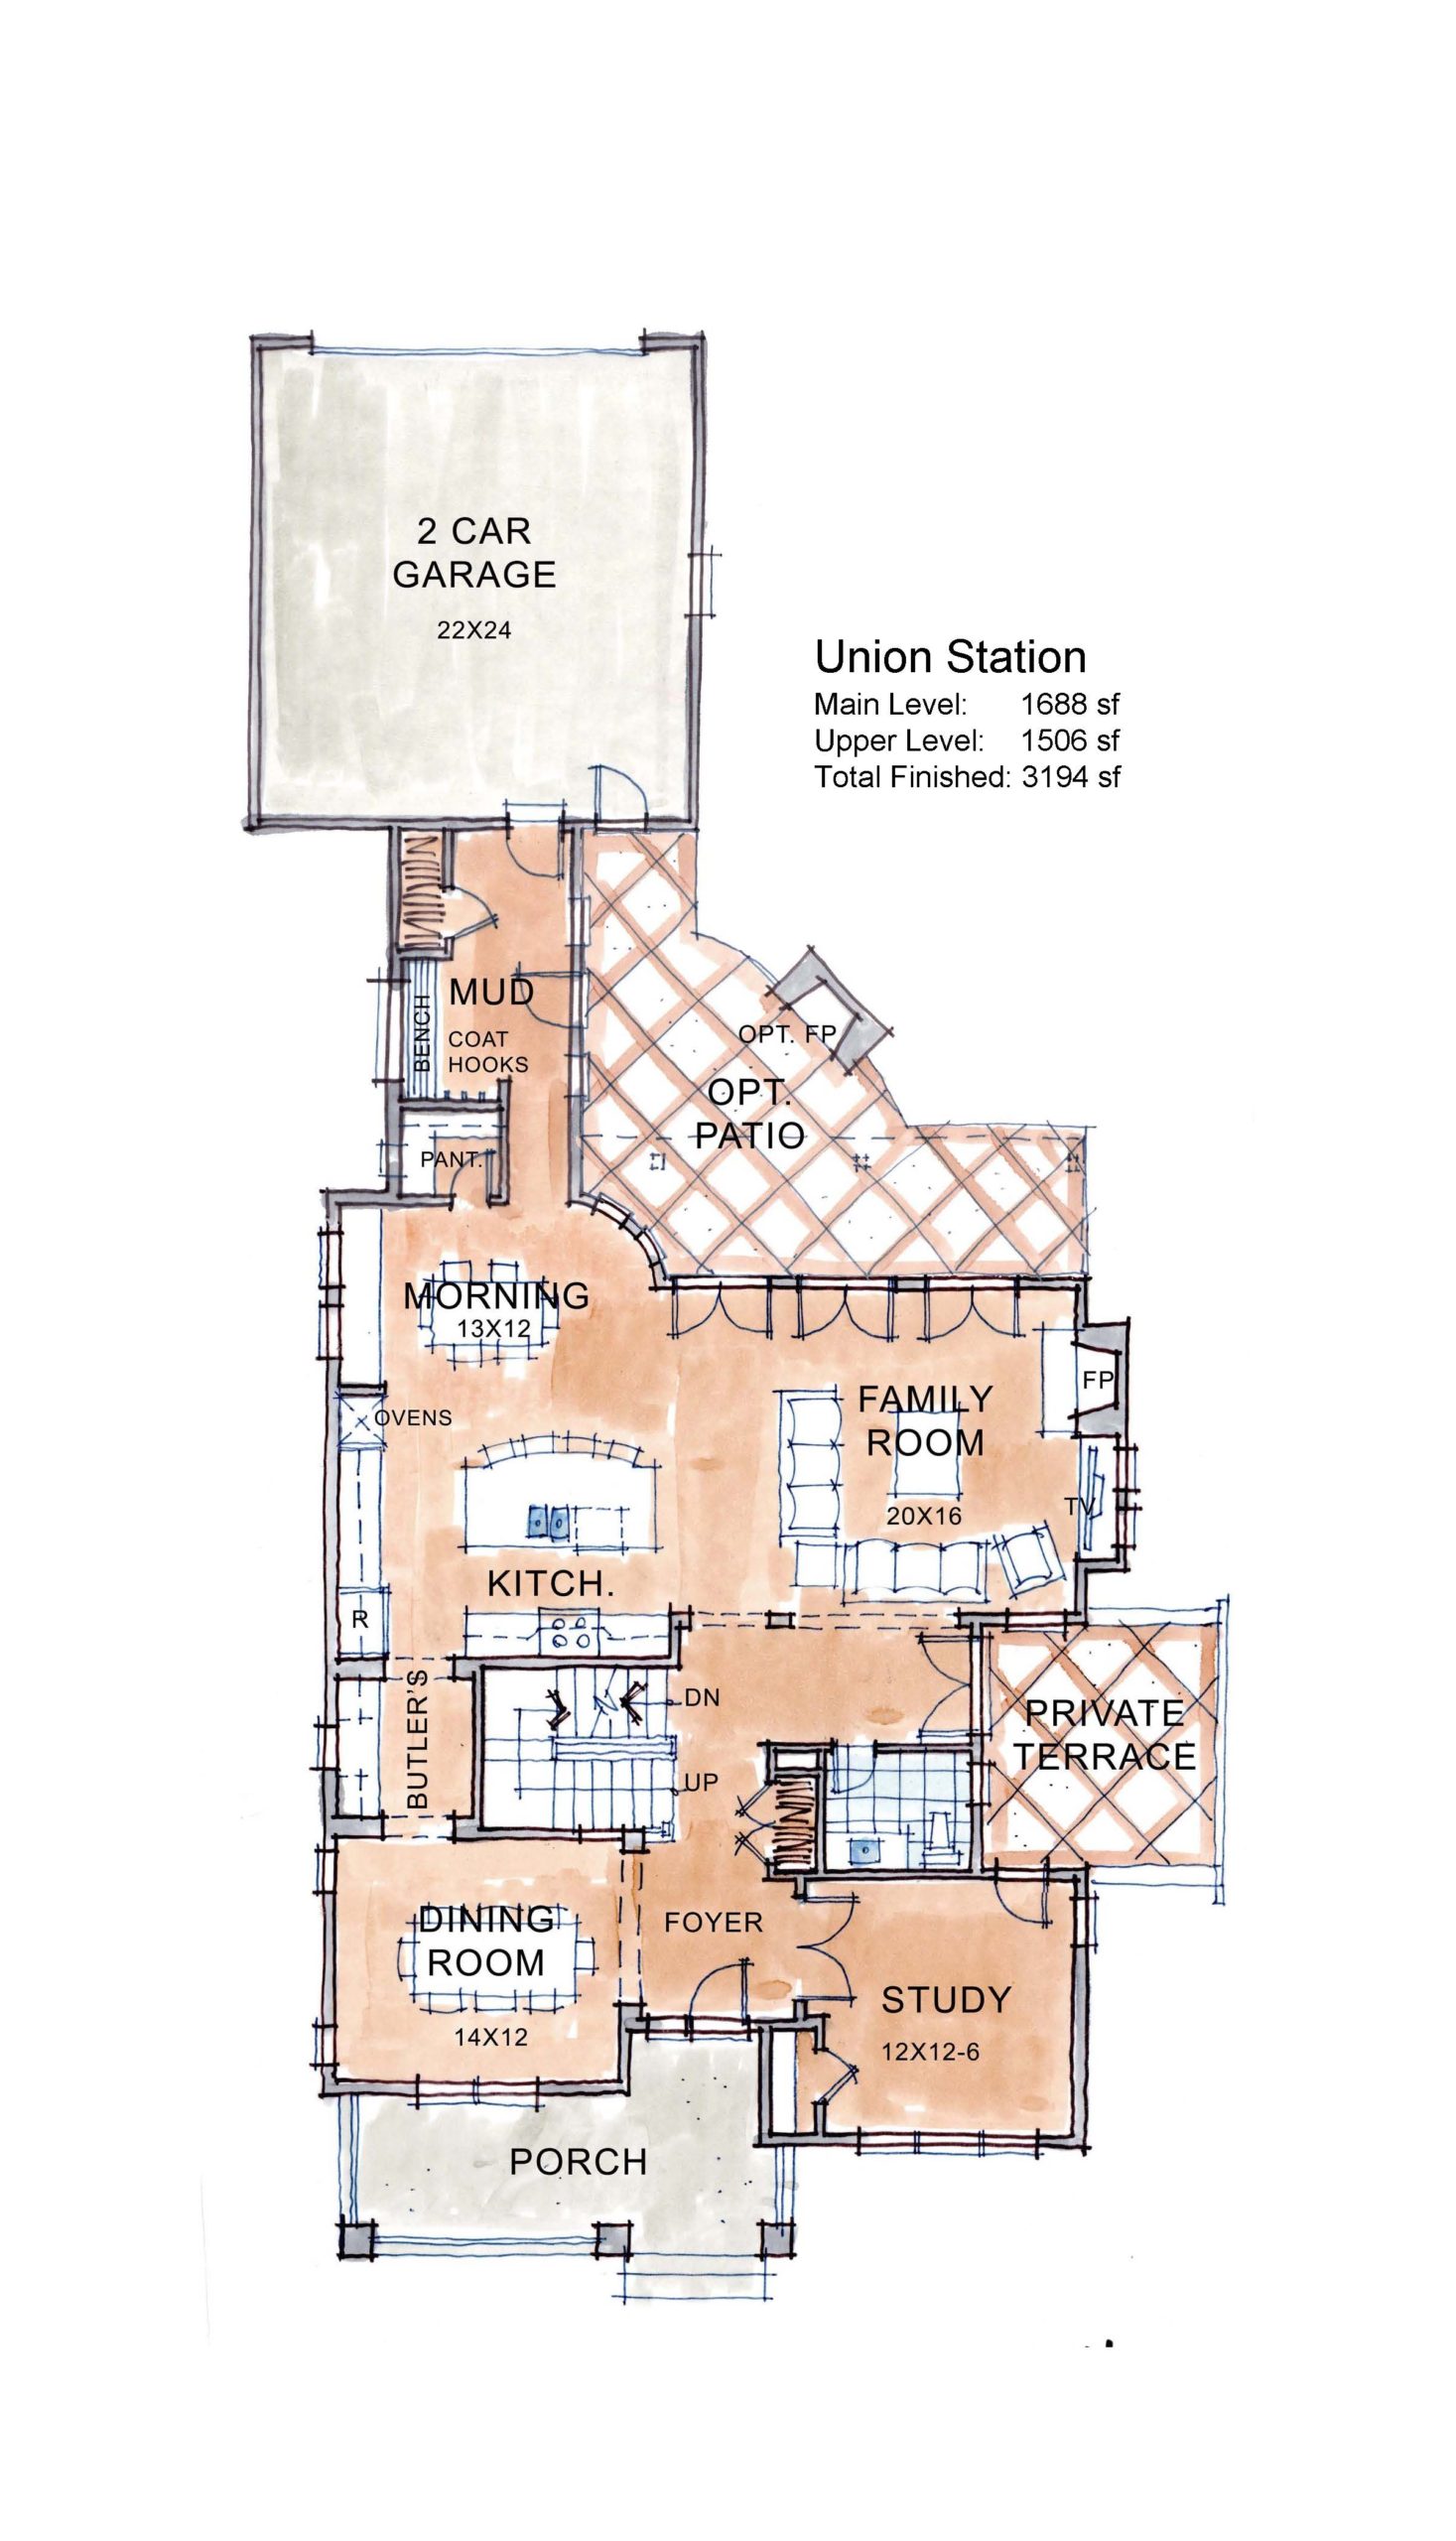 A union station design plan